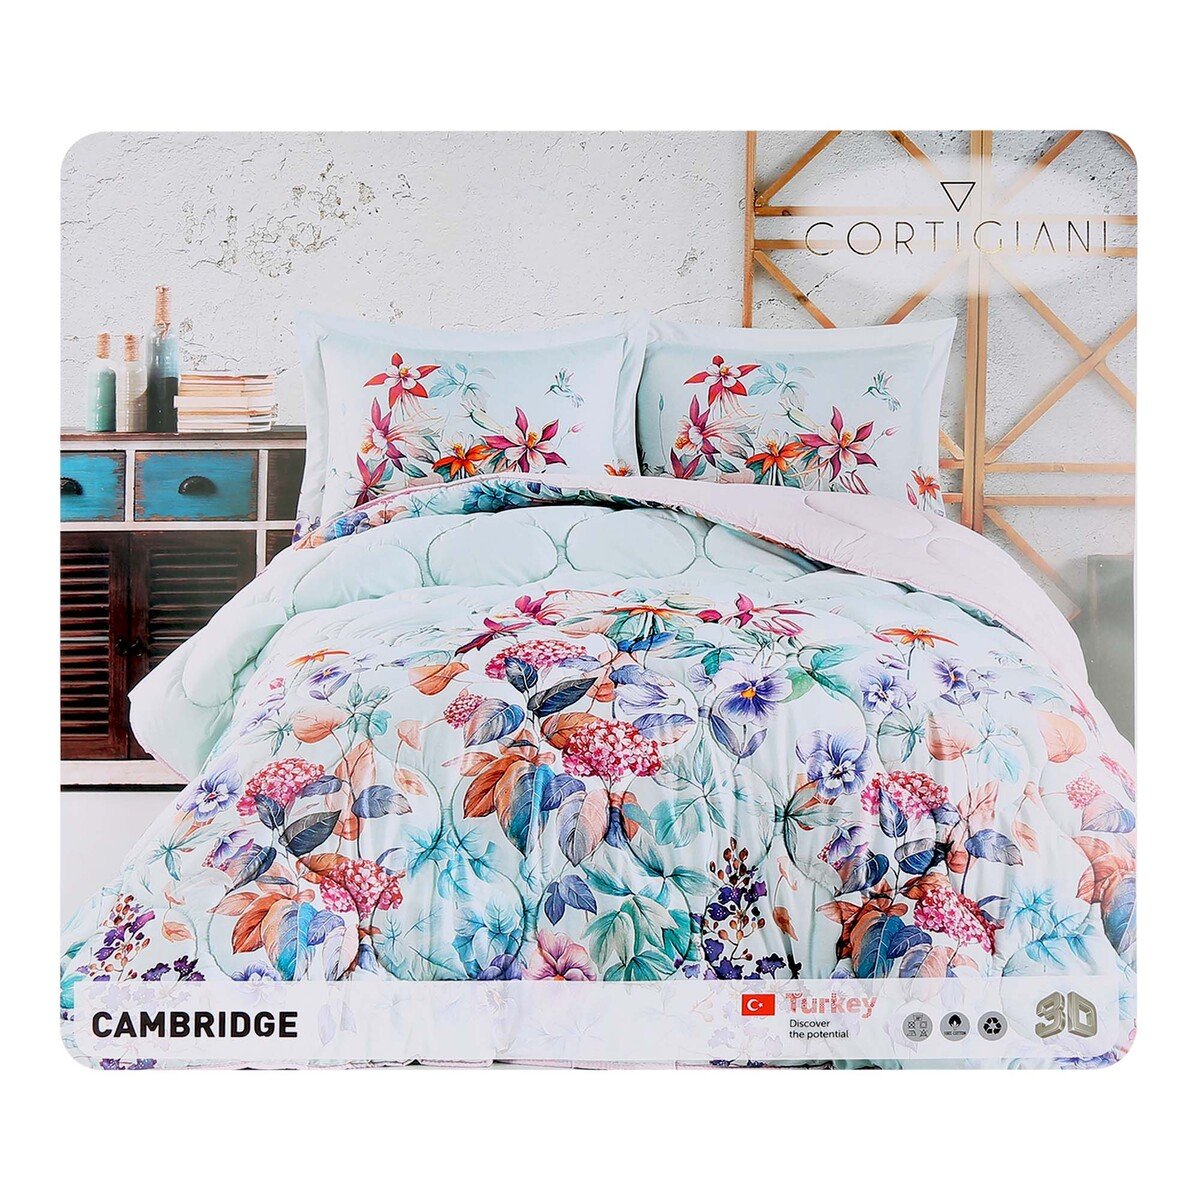 Cortigiani Comforter 4pcs Set Digital Print Cotton Assorted Colors & Designs